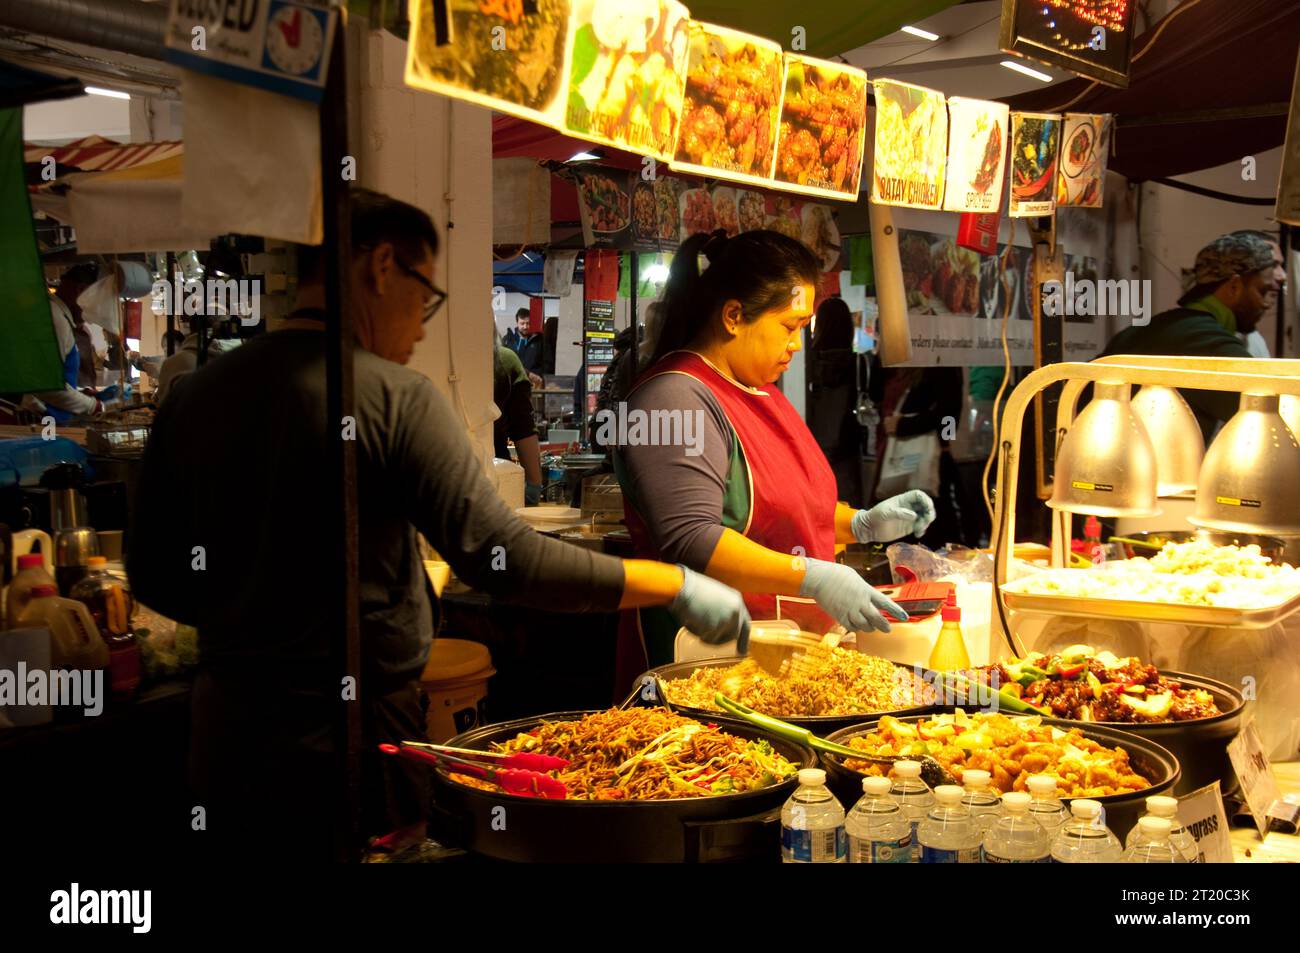 Chinese Food Stall, Upmarket Food Court, Brick Lane, London, UK Stock Photo